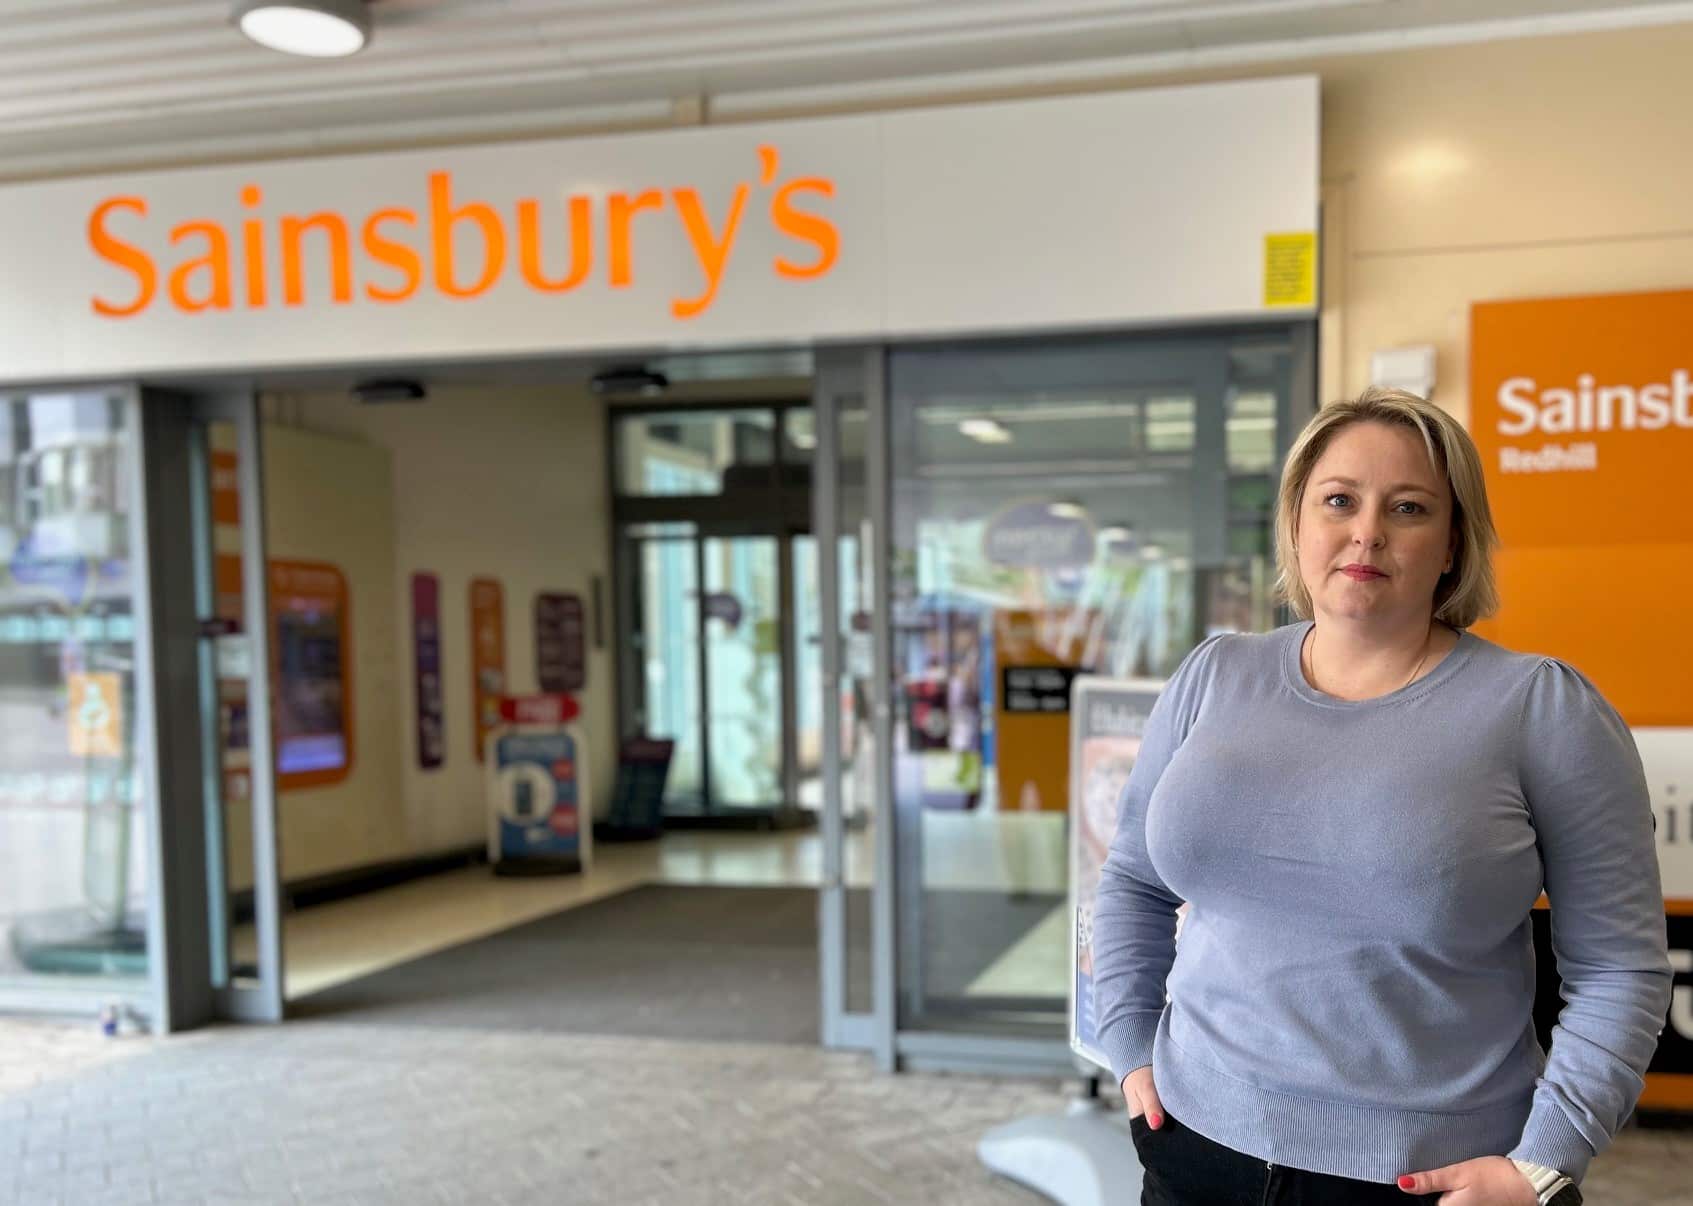 Police kaj Krimkomisaro Lisa Townsend starante ekster Sainsbury's en Redhill urbocentro